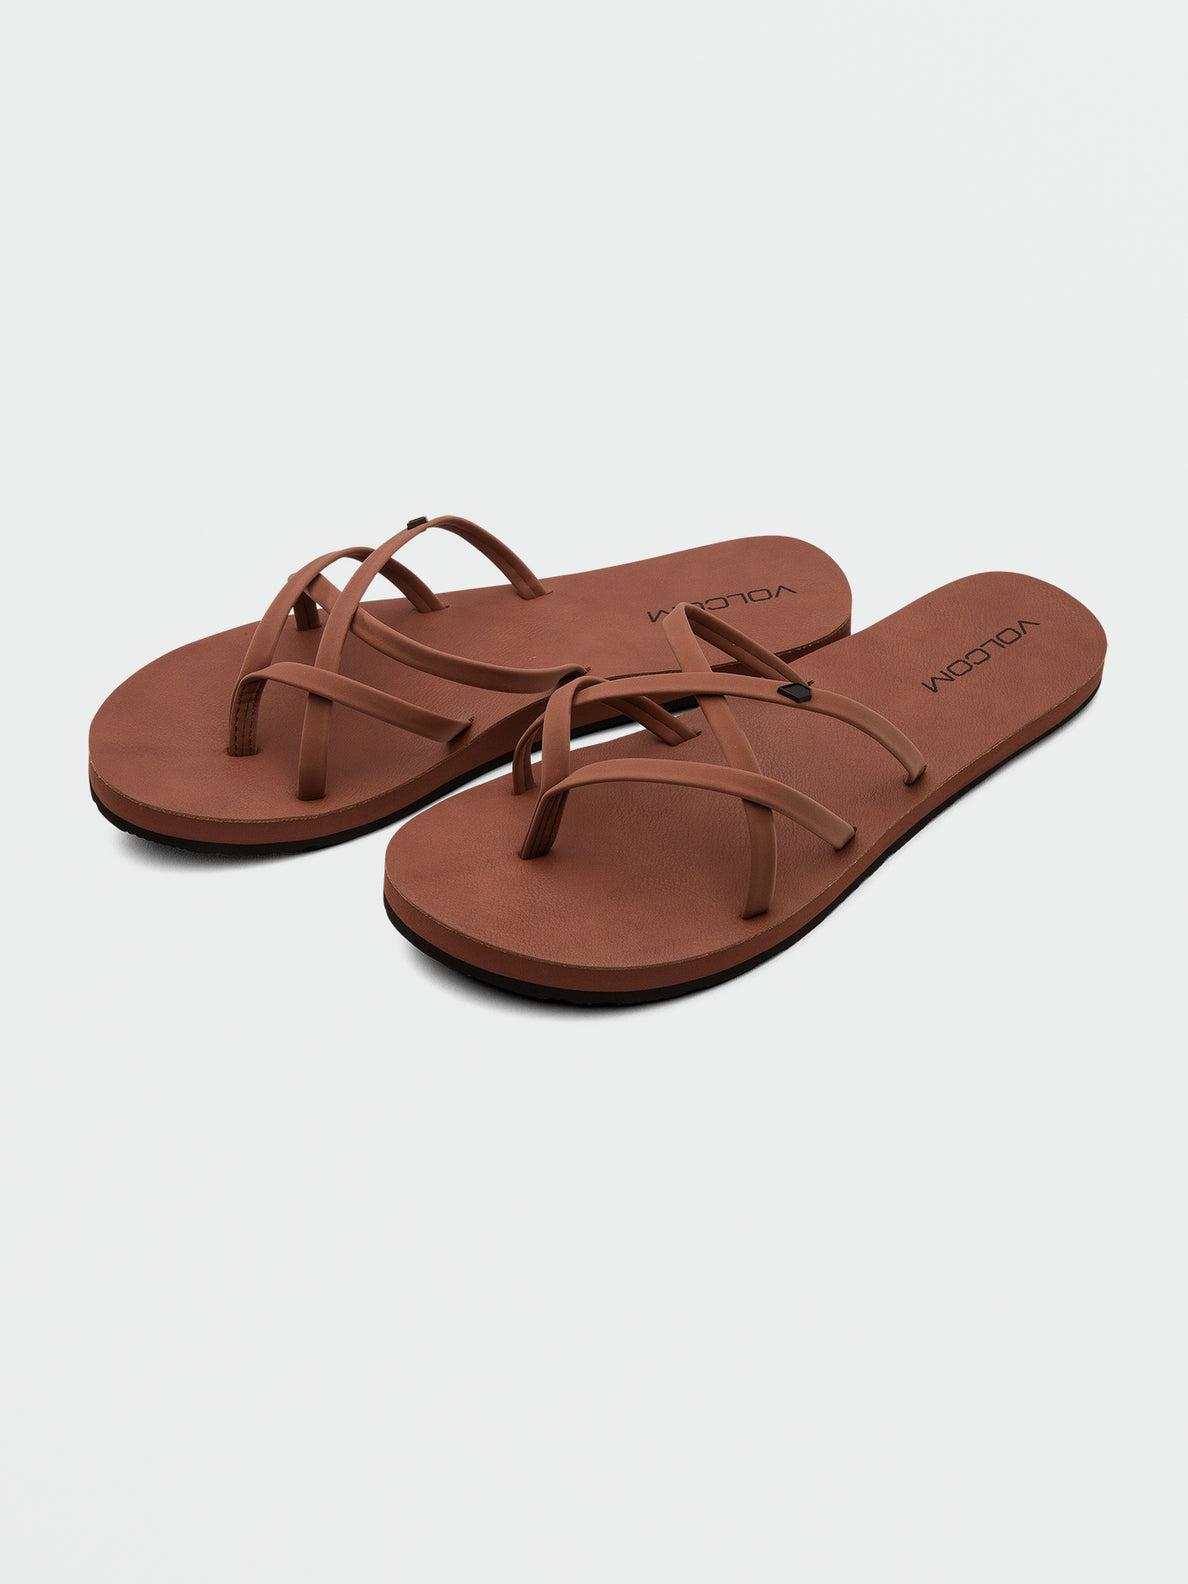 Buy Quiksilver Sandals Online Store South Africa - Black / Black / Brown  Travel Oasis Mens